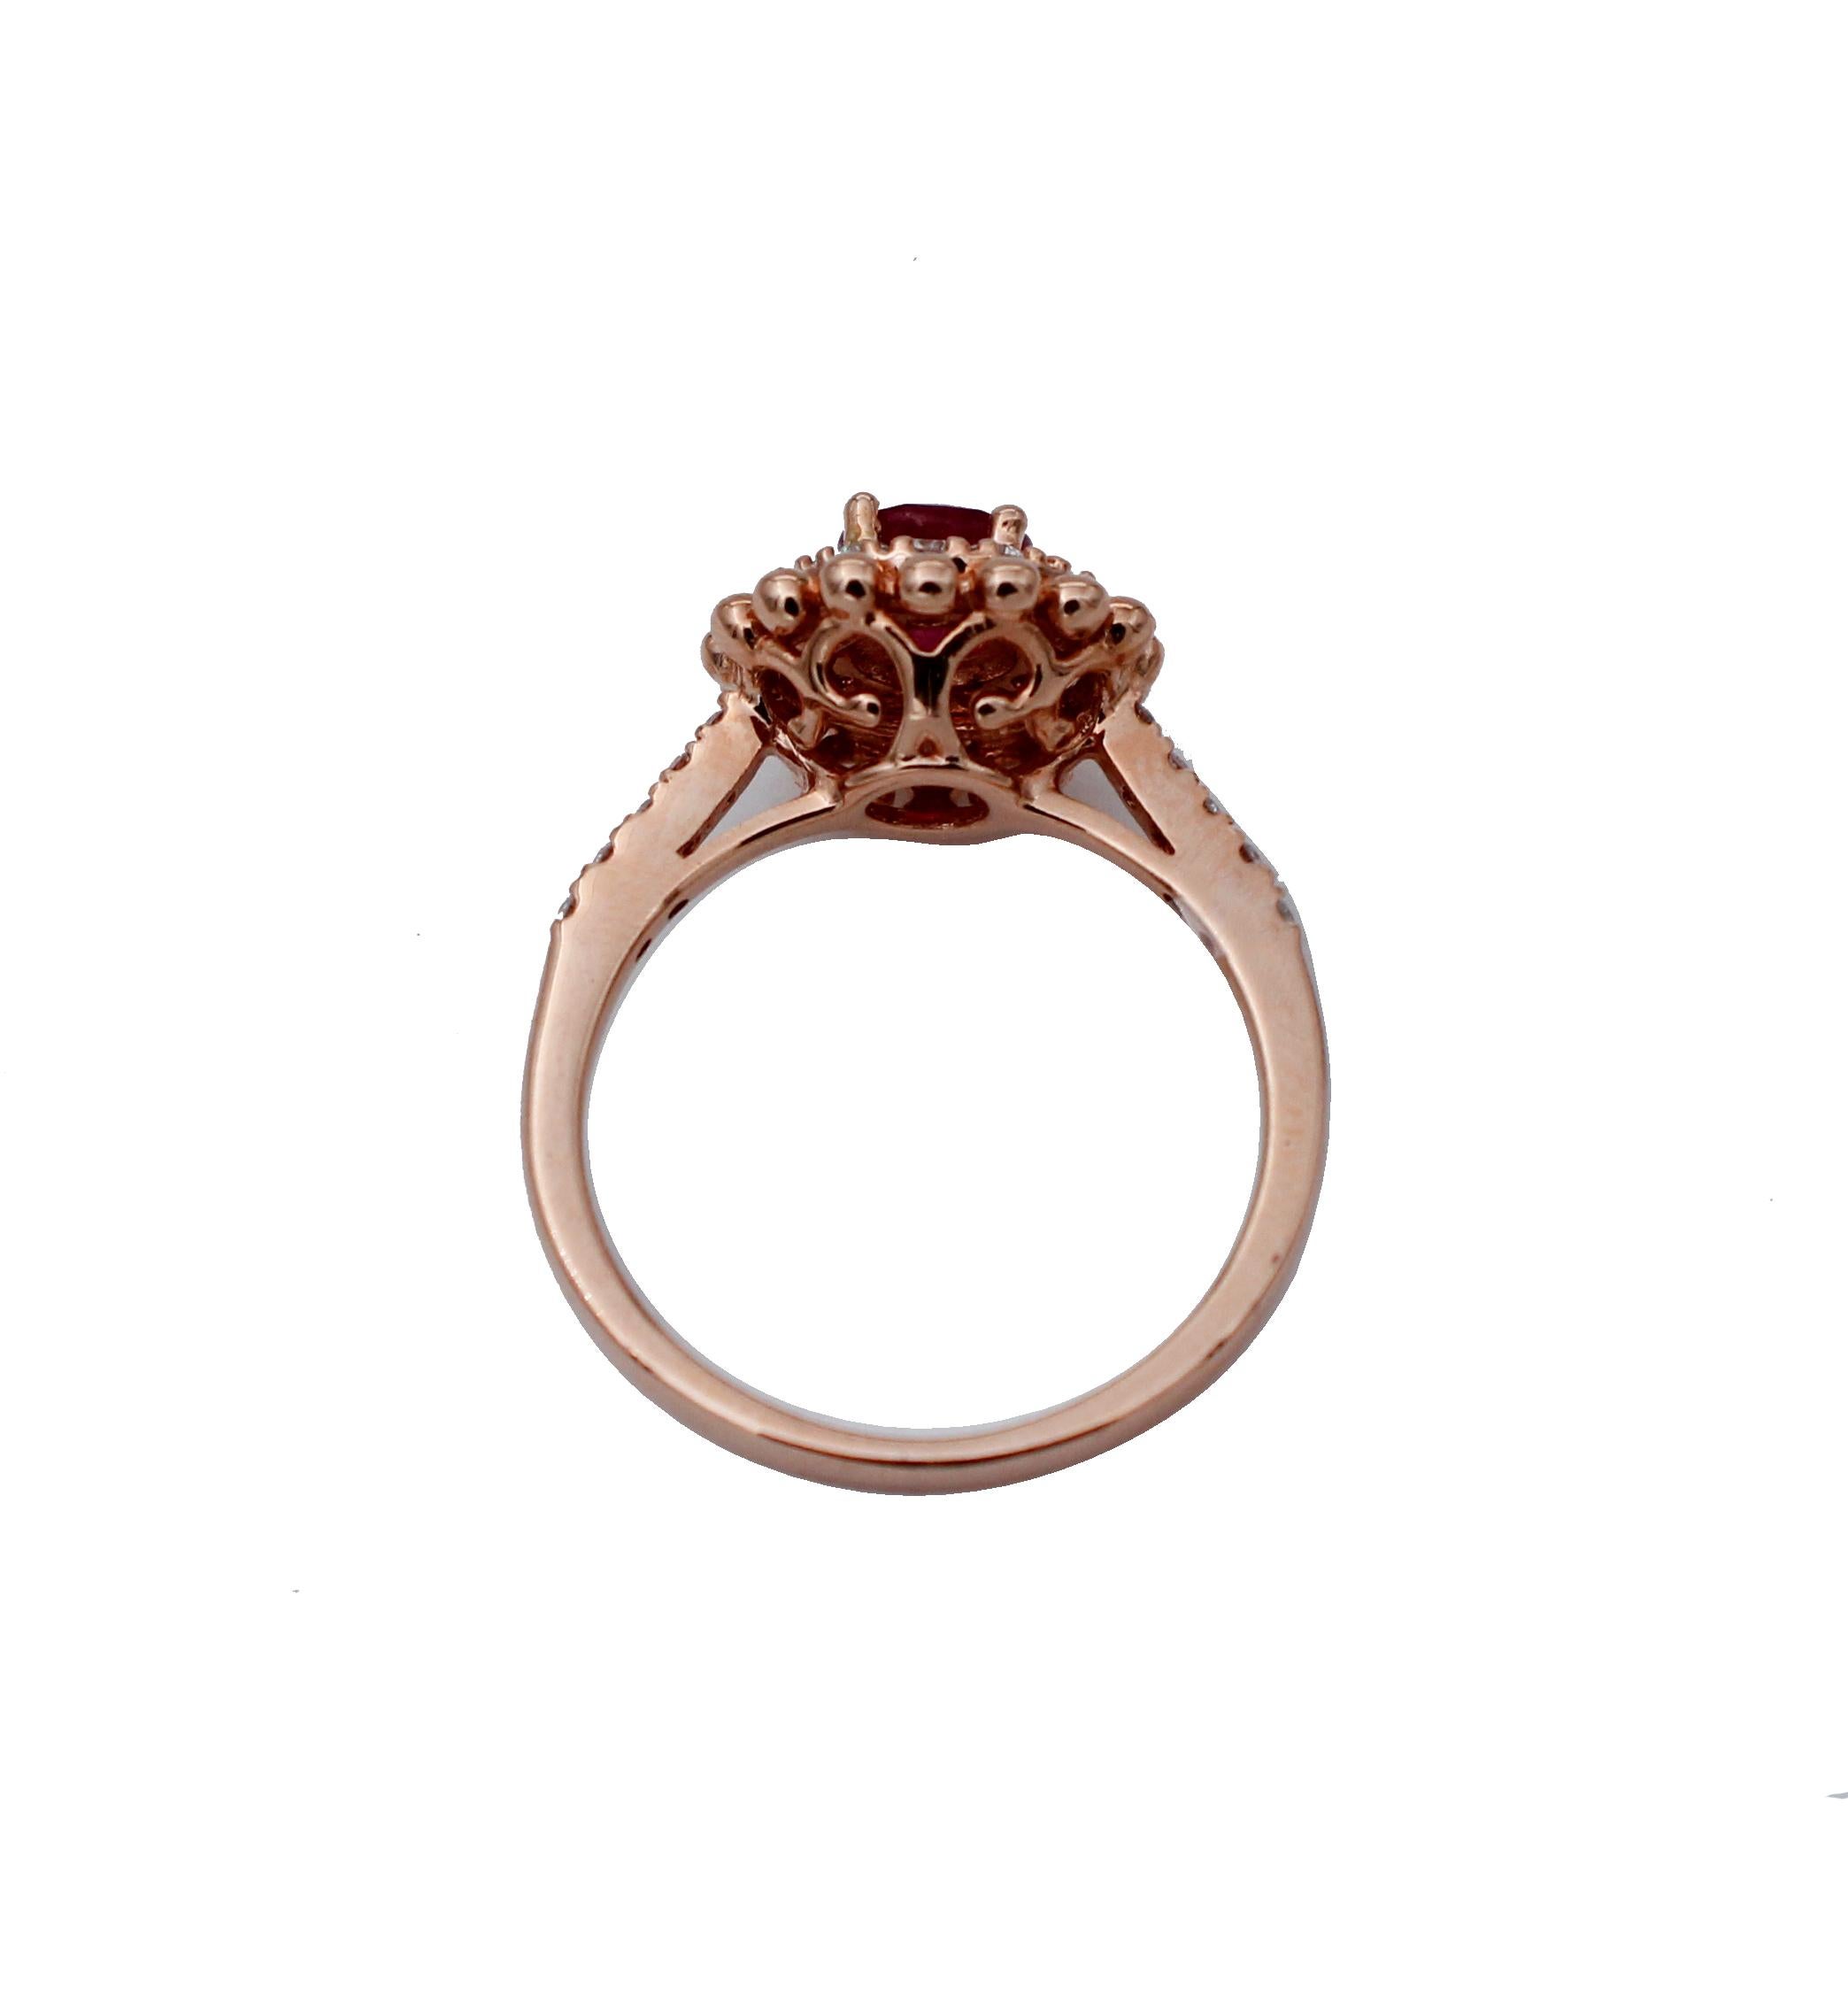 Mixed Cut Ruby, Diamonds, 18 Karat Rose Gold Ring